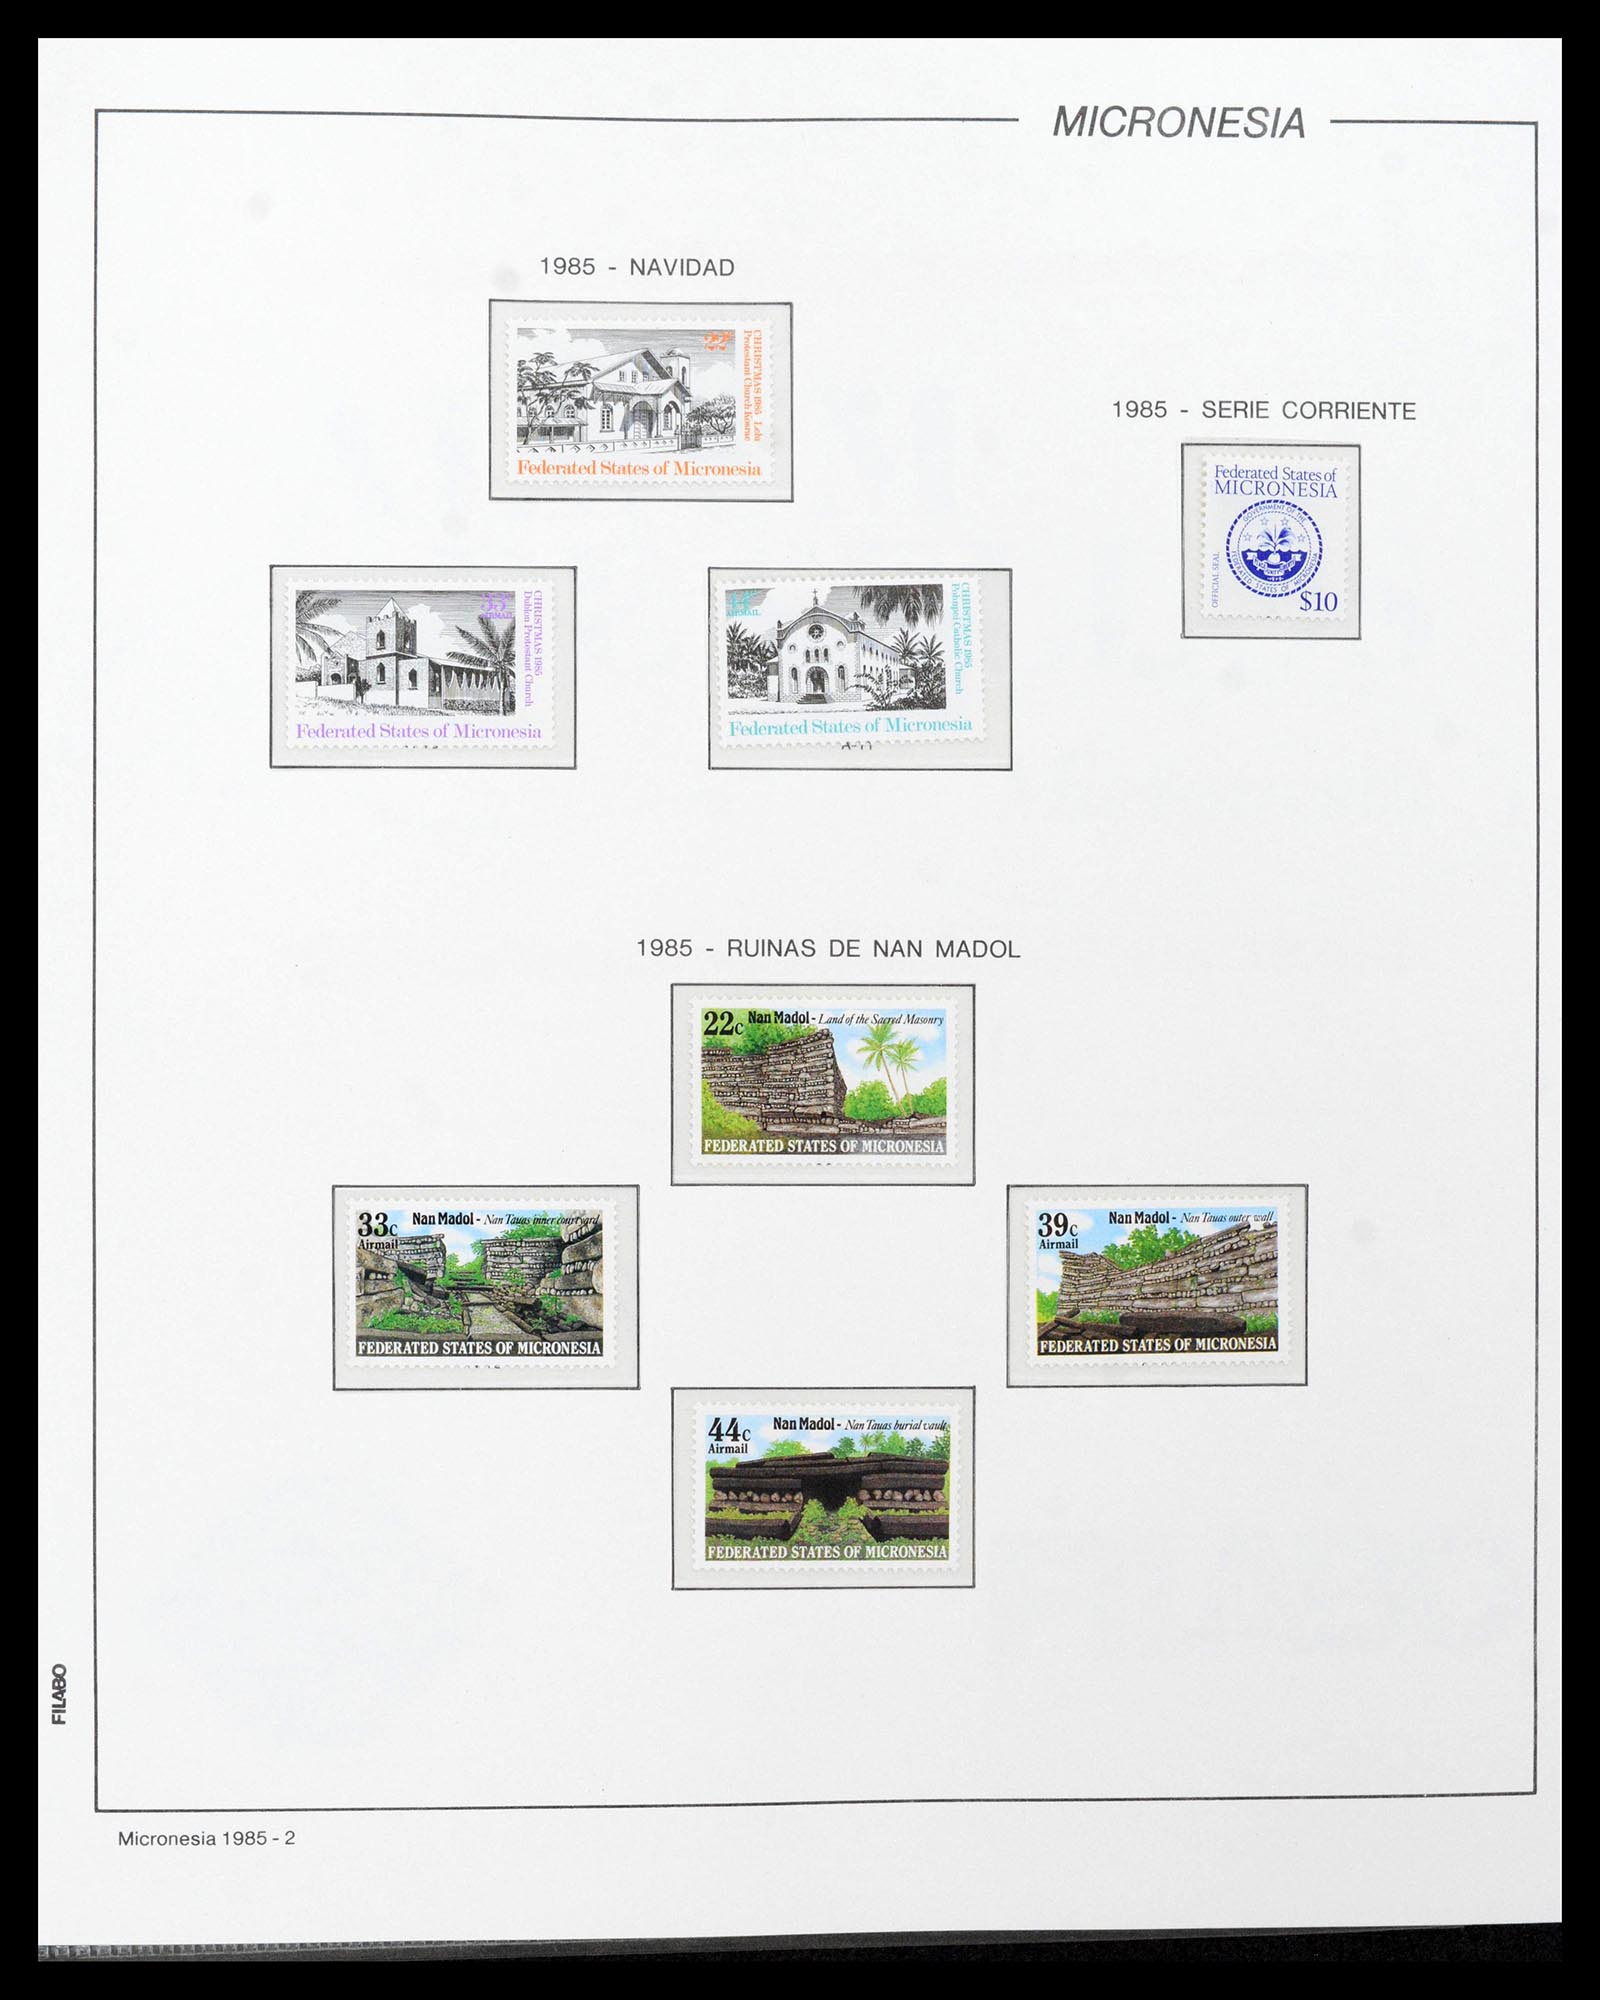 39222 0068 - Stamp collection 39222 Palau, Micronesia and Marshall islands 1980-1995.